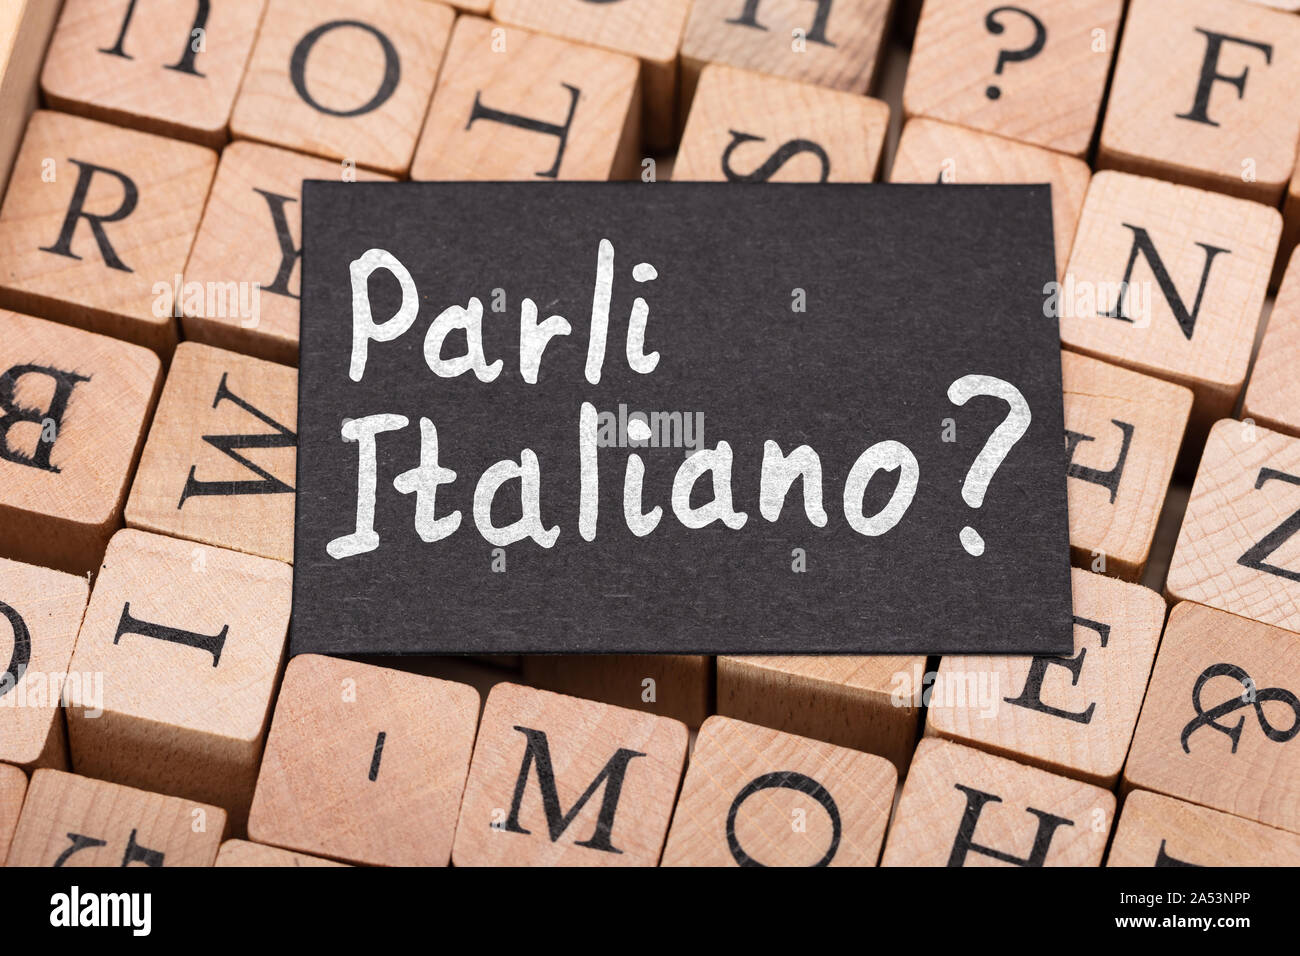 Speak Italian Question On Small Letter Wooden Blocks Stock Photo